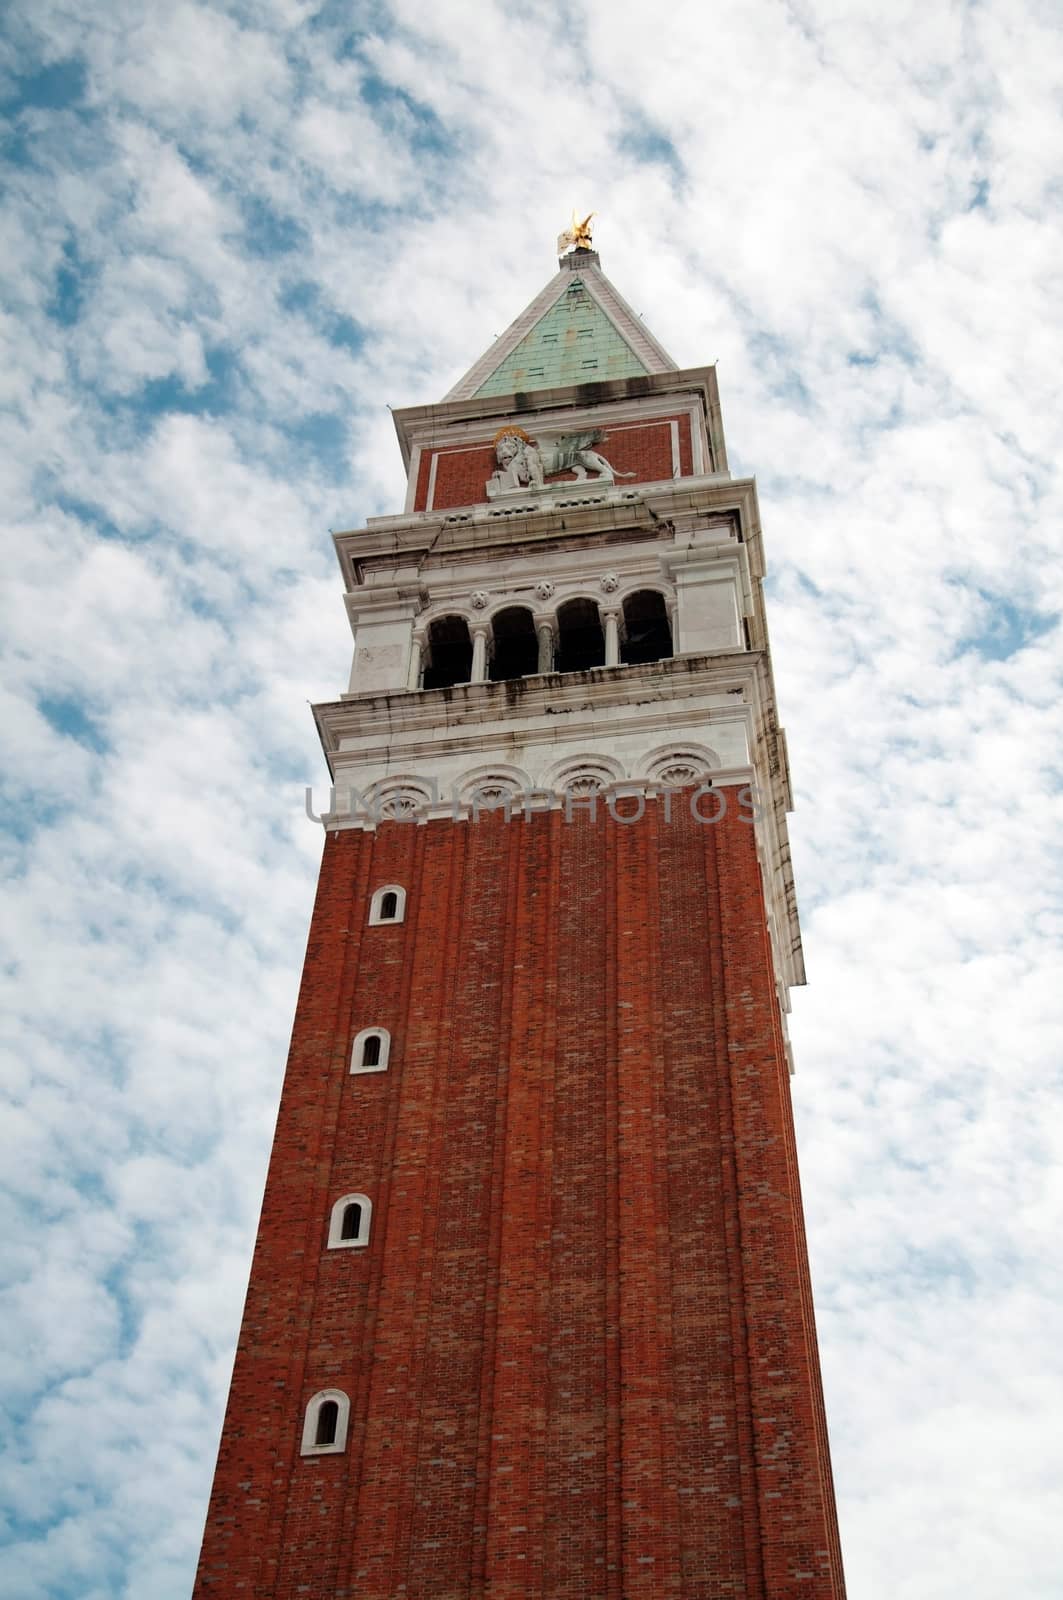 Venice bell tower by tony4urban